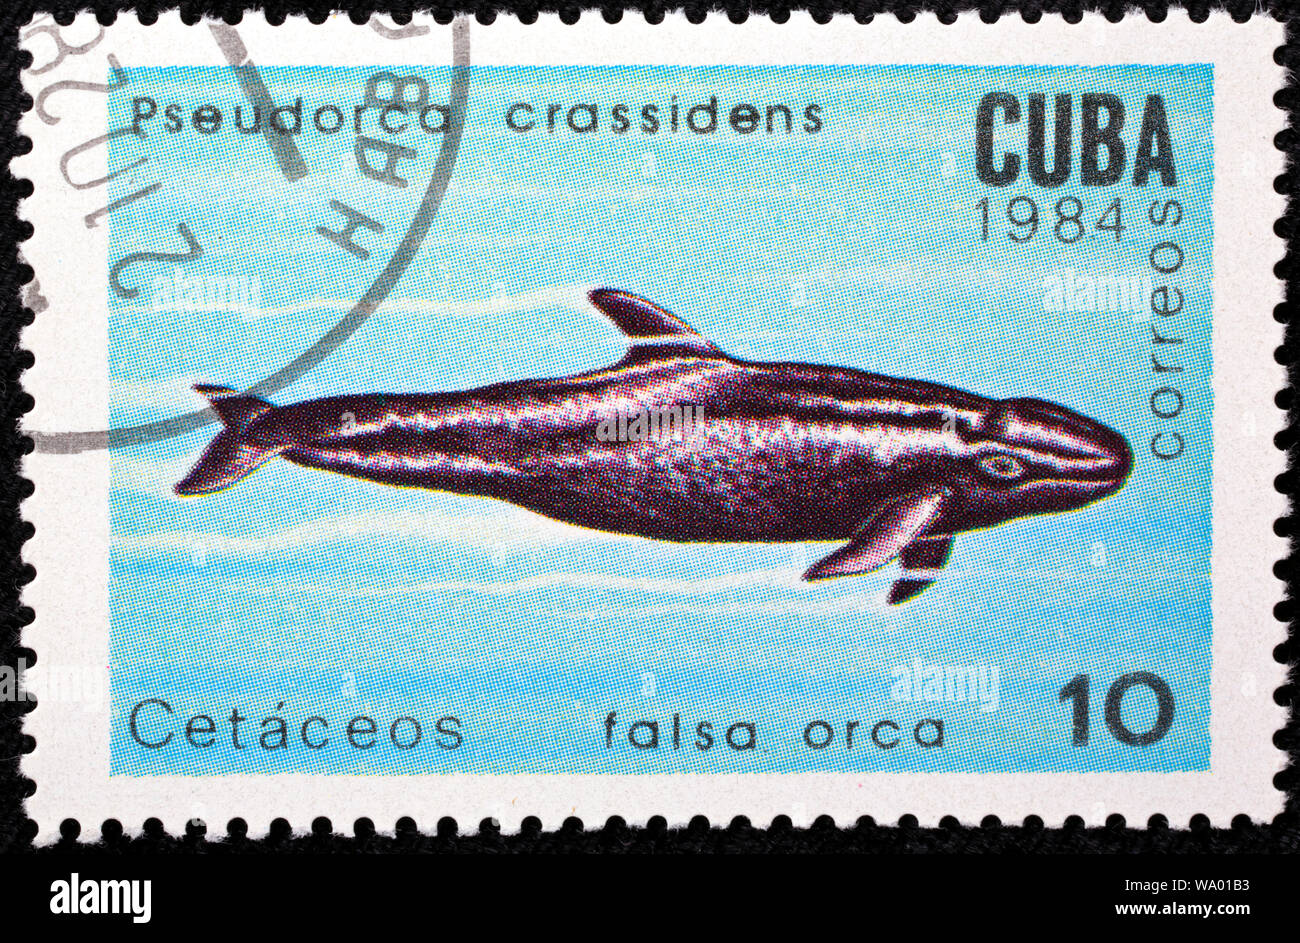 Falso Killer Whale, Pseudorca crassidens, francobollo, Cuba, 1984 Foto Stock